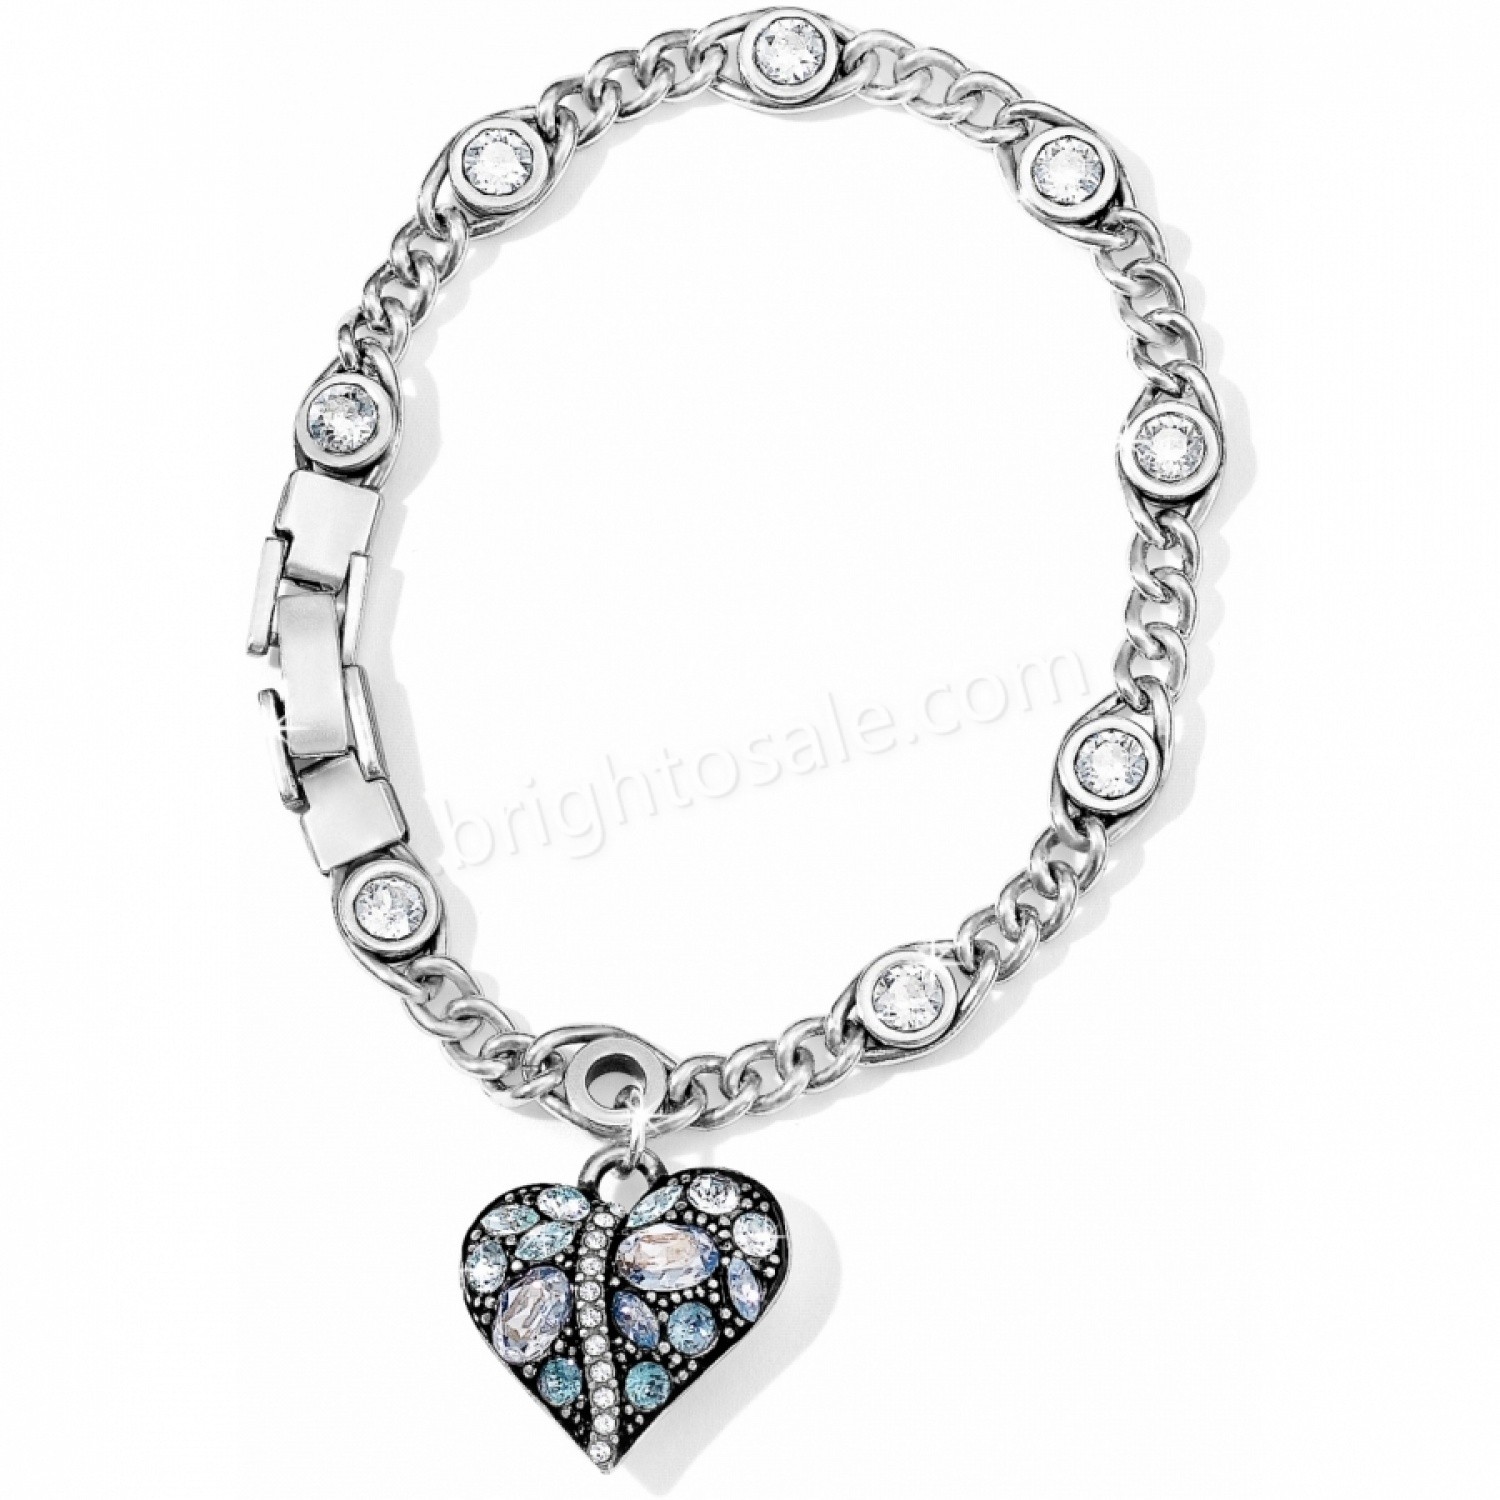 Brighton Collectibles & Online Discount Spectrum Petite Heart Bracelet Gift Set - Brighton Collectibles & Online Discount Spectrum Petite Heart Bracelet Gift Set